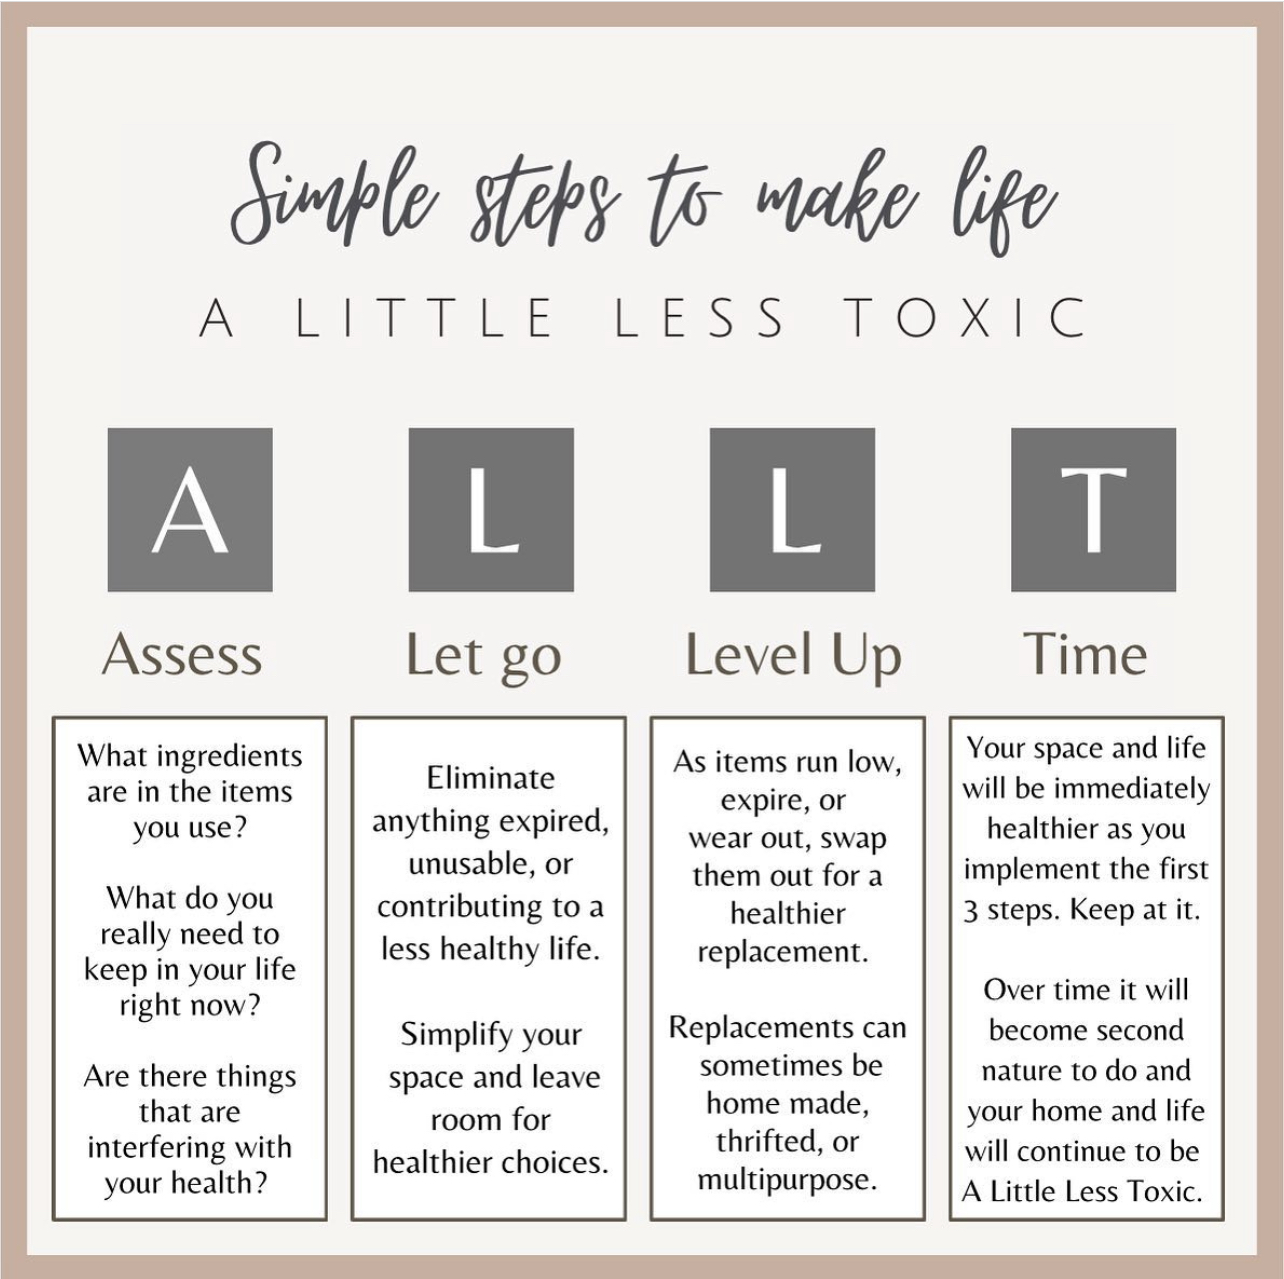 Simple Steps to Make Life ALLT